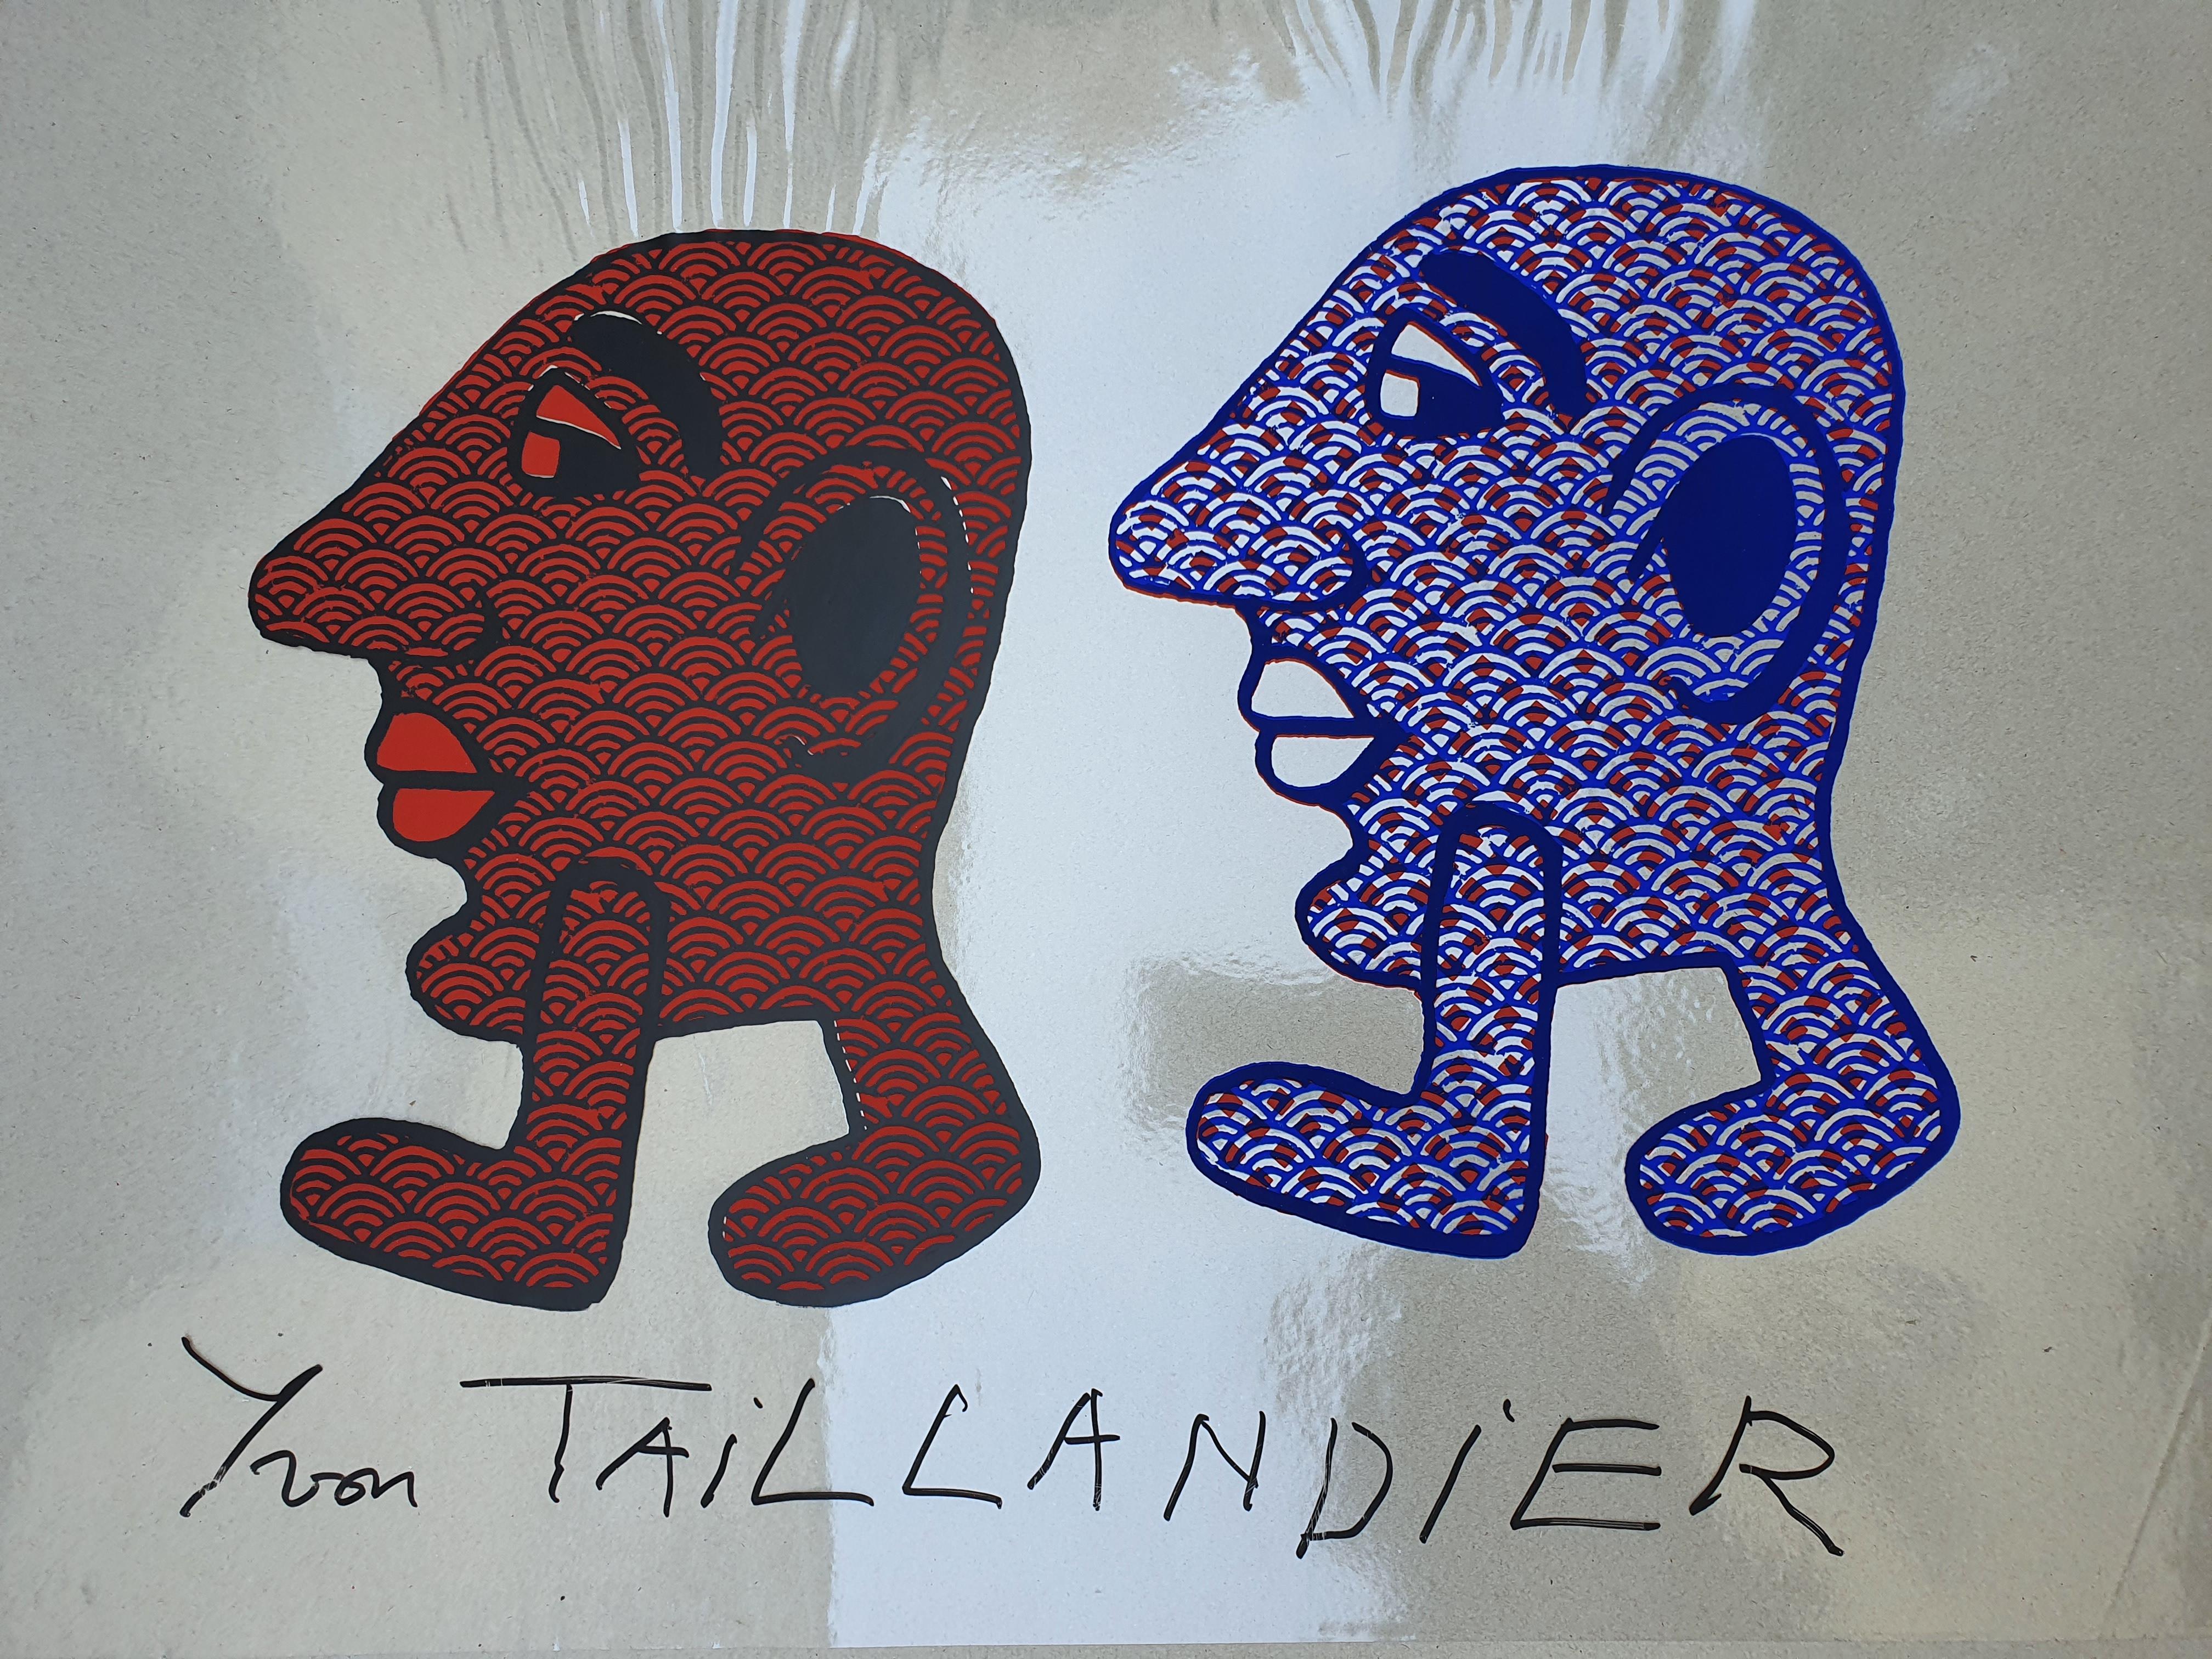 Figurative Print Yvon Taillandier - Impression sérigraphie Duo 3 Capitipede - 2015